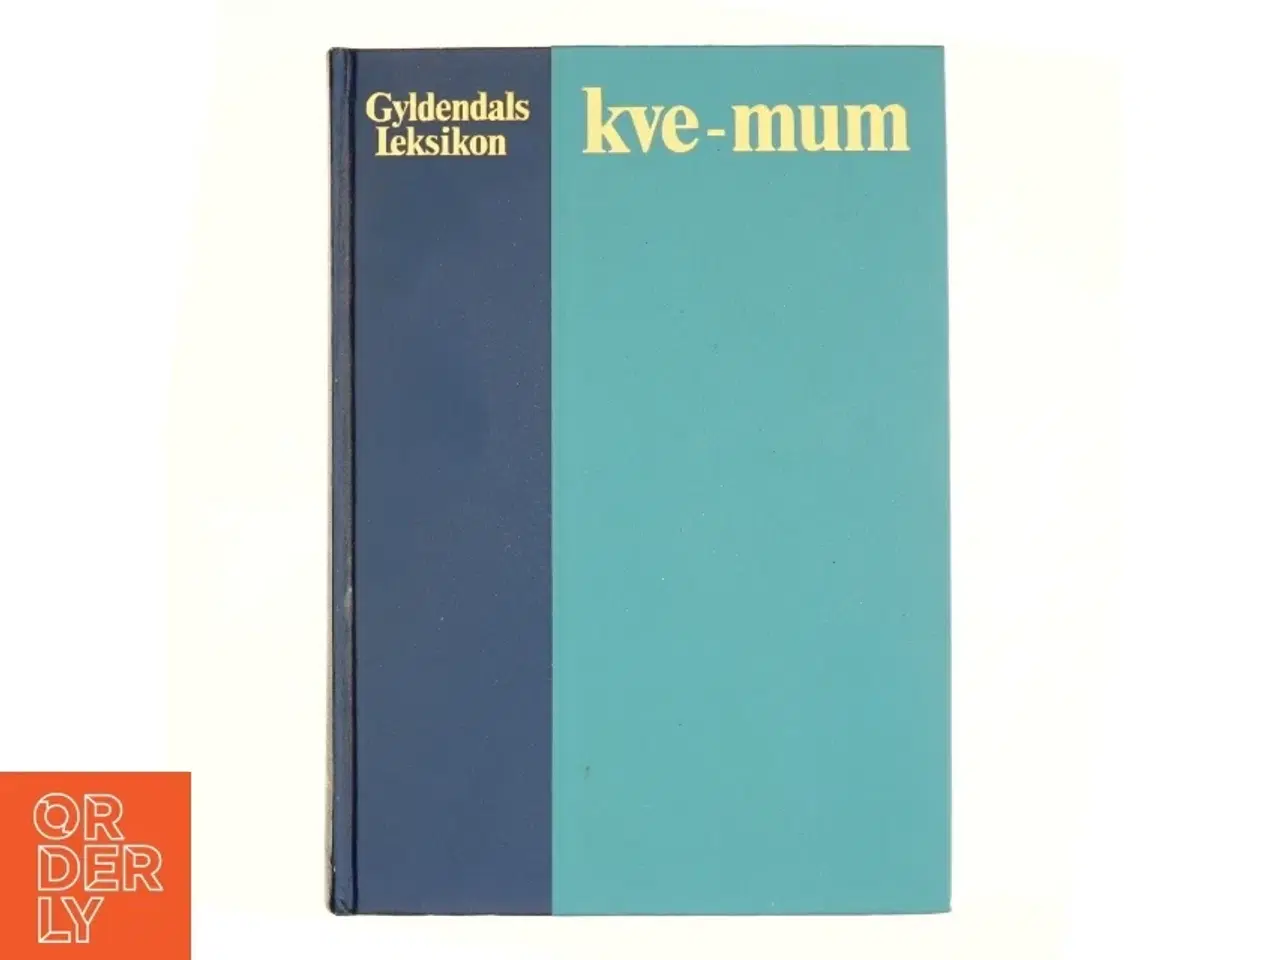 Billede 1 - Gyldendals leksikon kve-mum